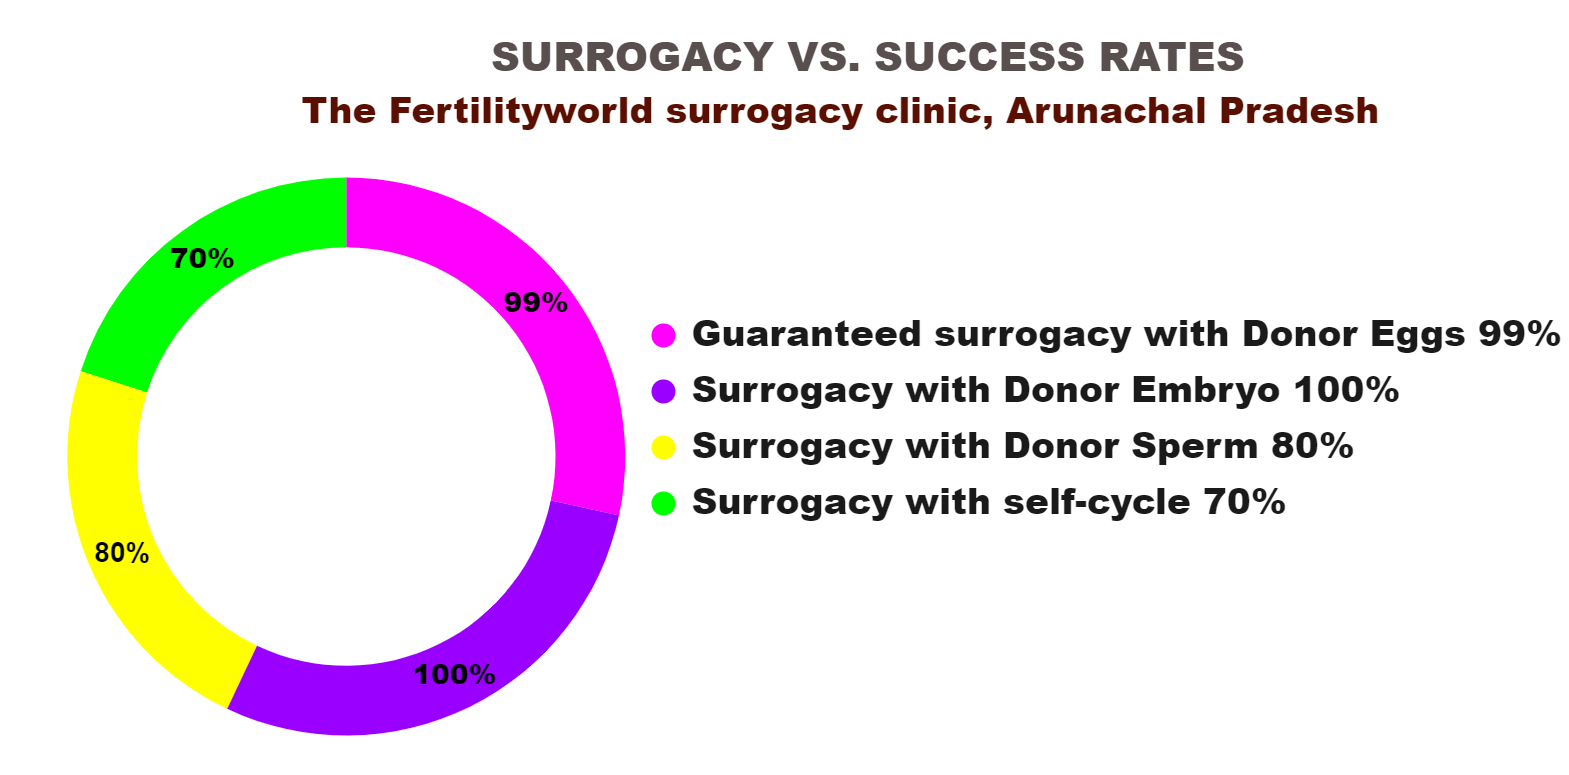  surrogacy success rates in Arunachal Pradesh